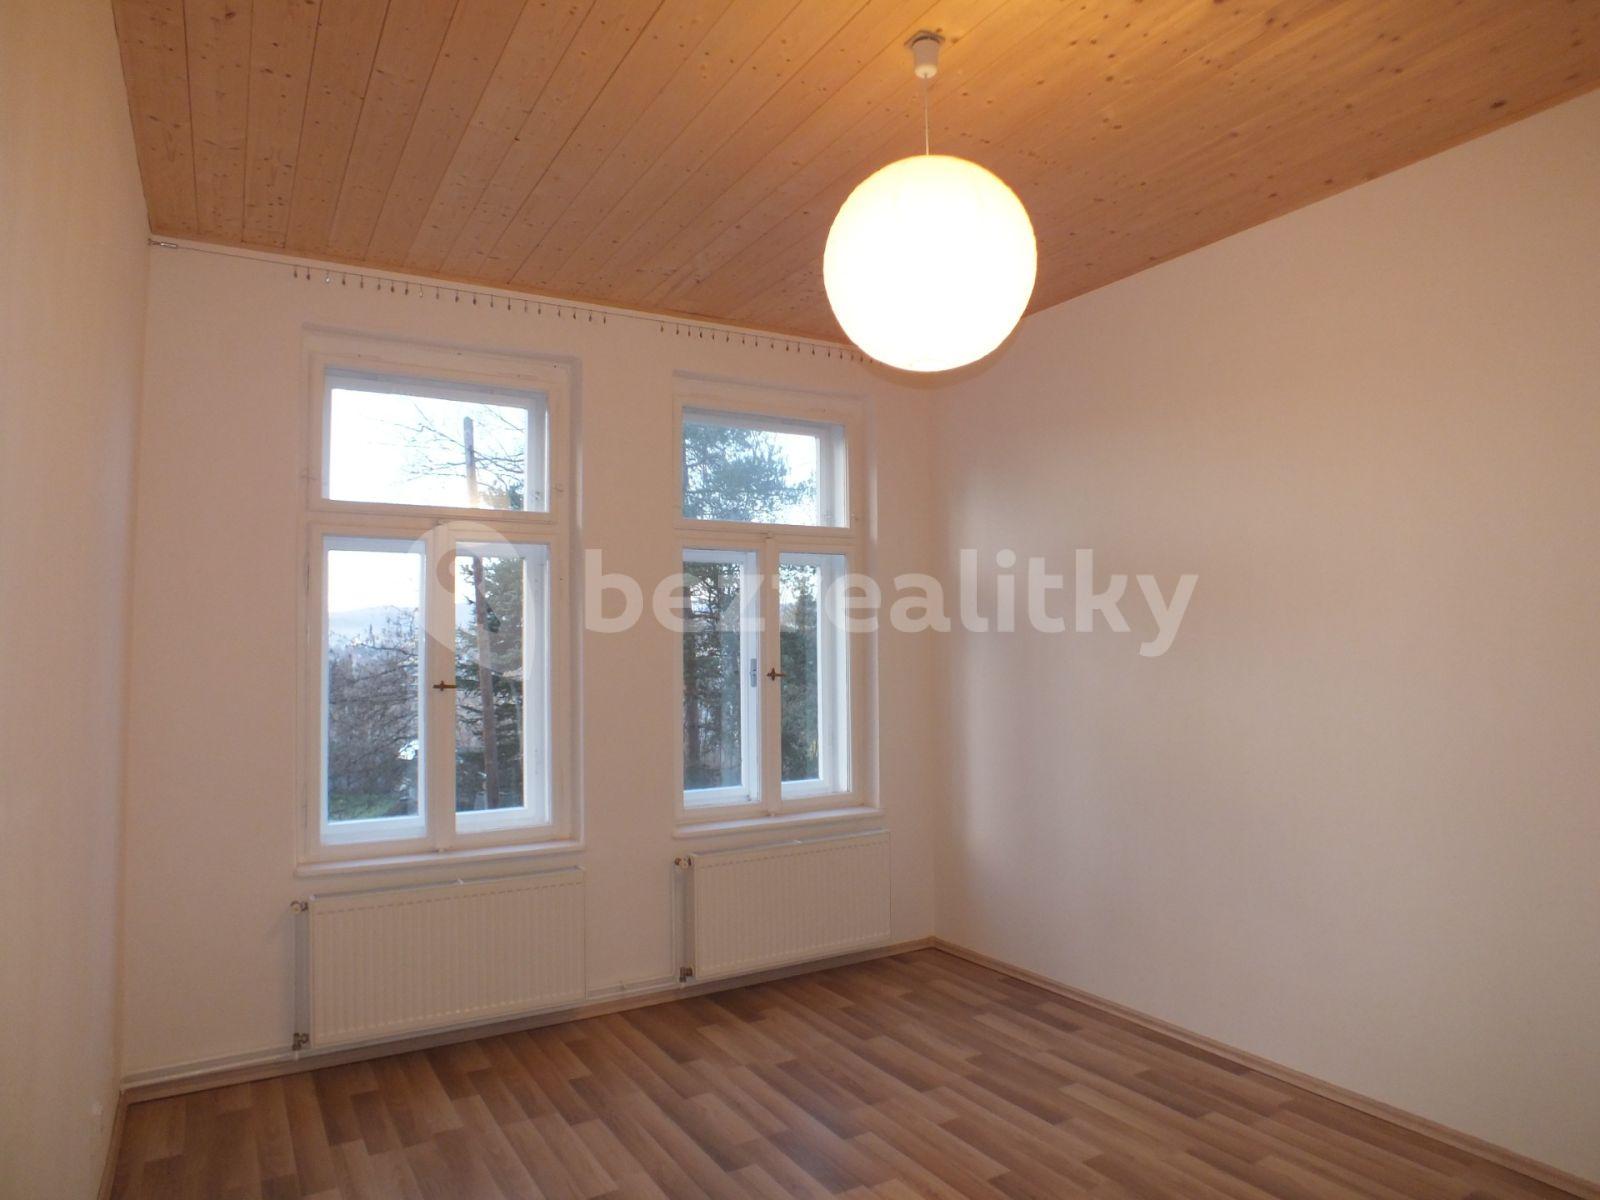 1 bedroom flat to rent, 33 m², Liliová, Jablonec nad Nisou, Liberecký Region